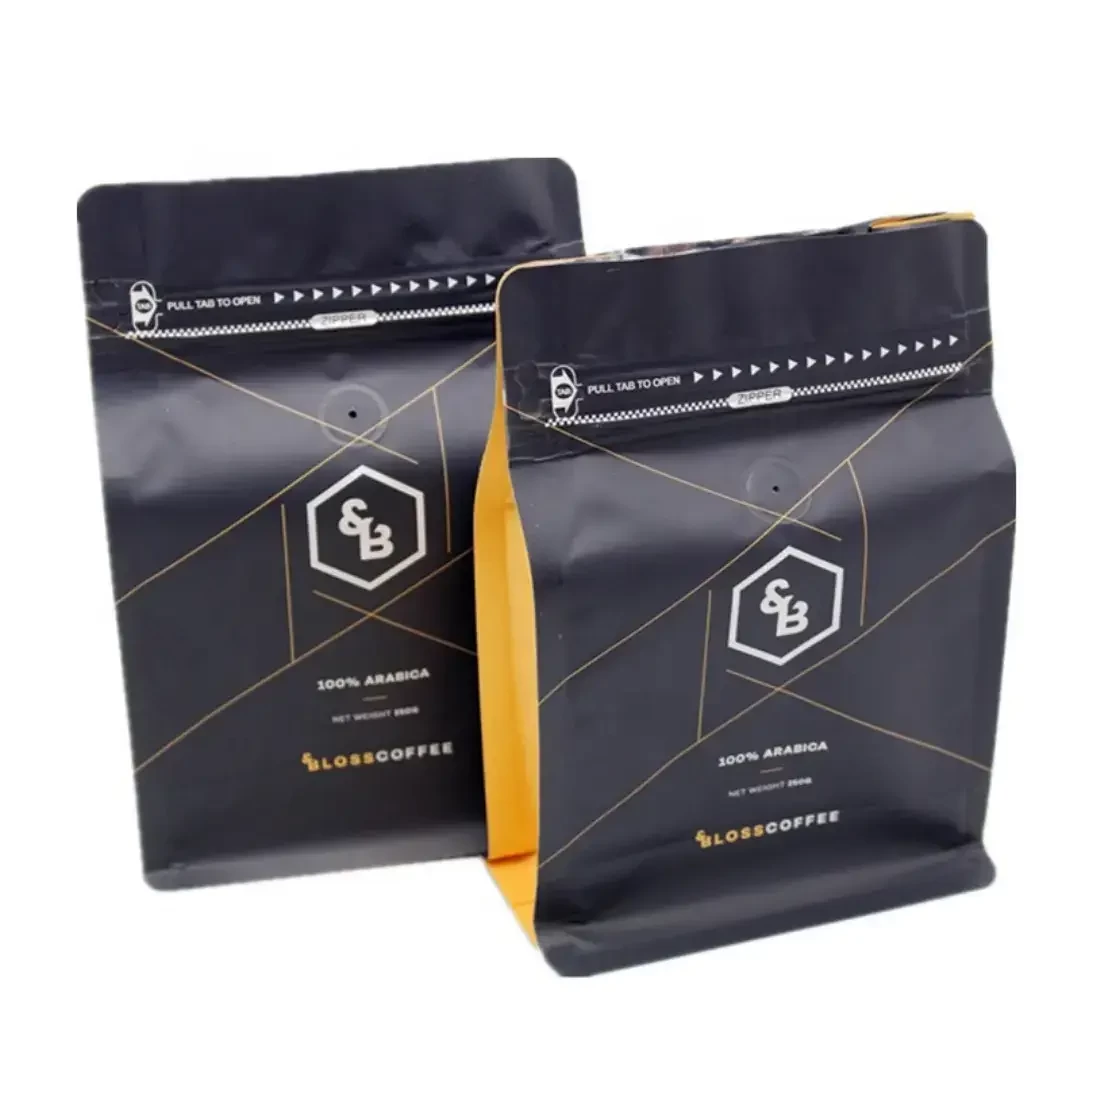 custom-printed-coffee-bags